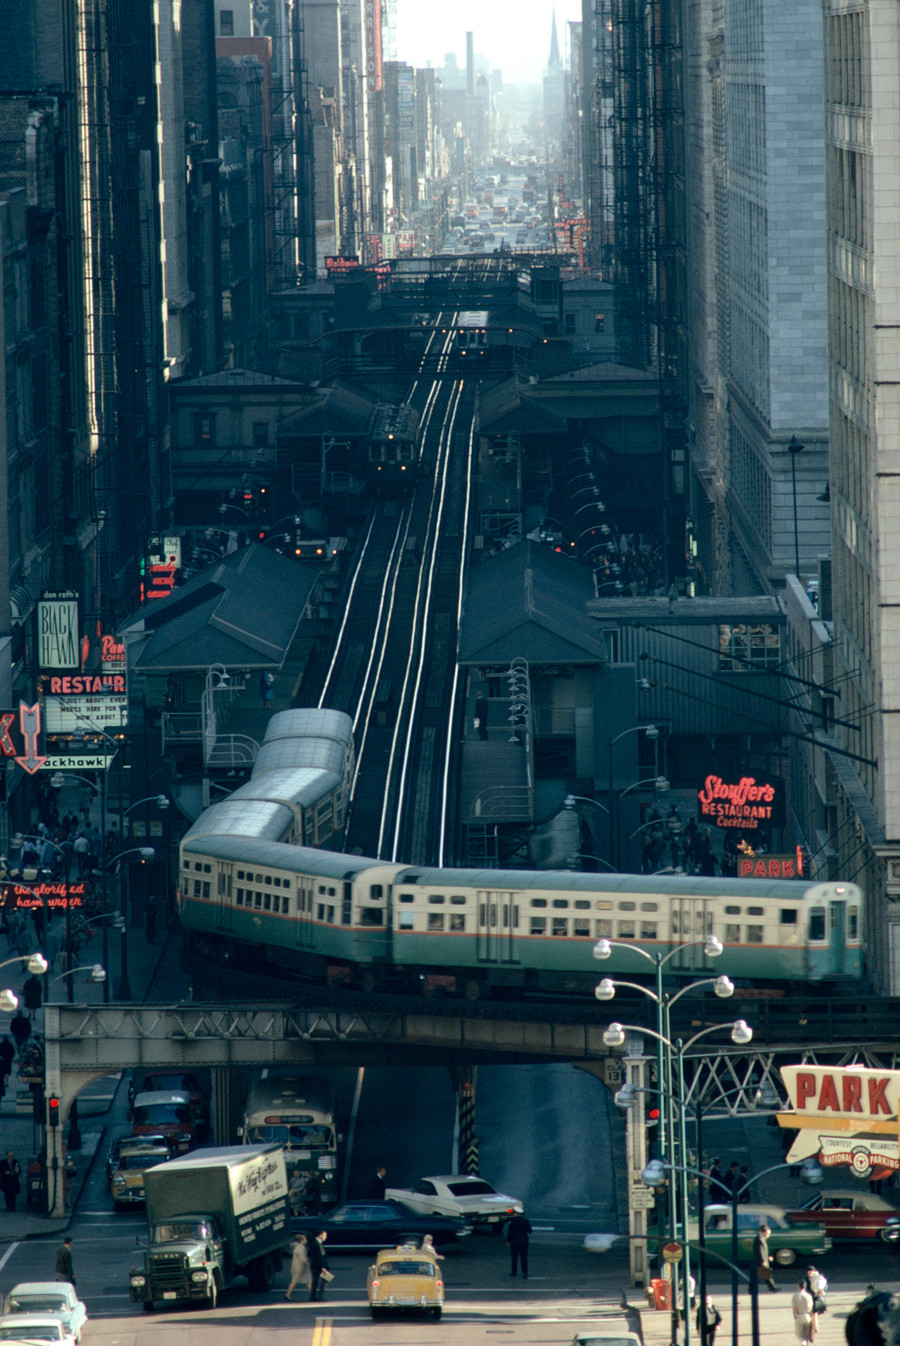 historical-photos-pt9-chicago-train-1967.jpg